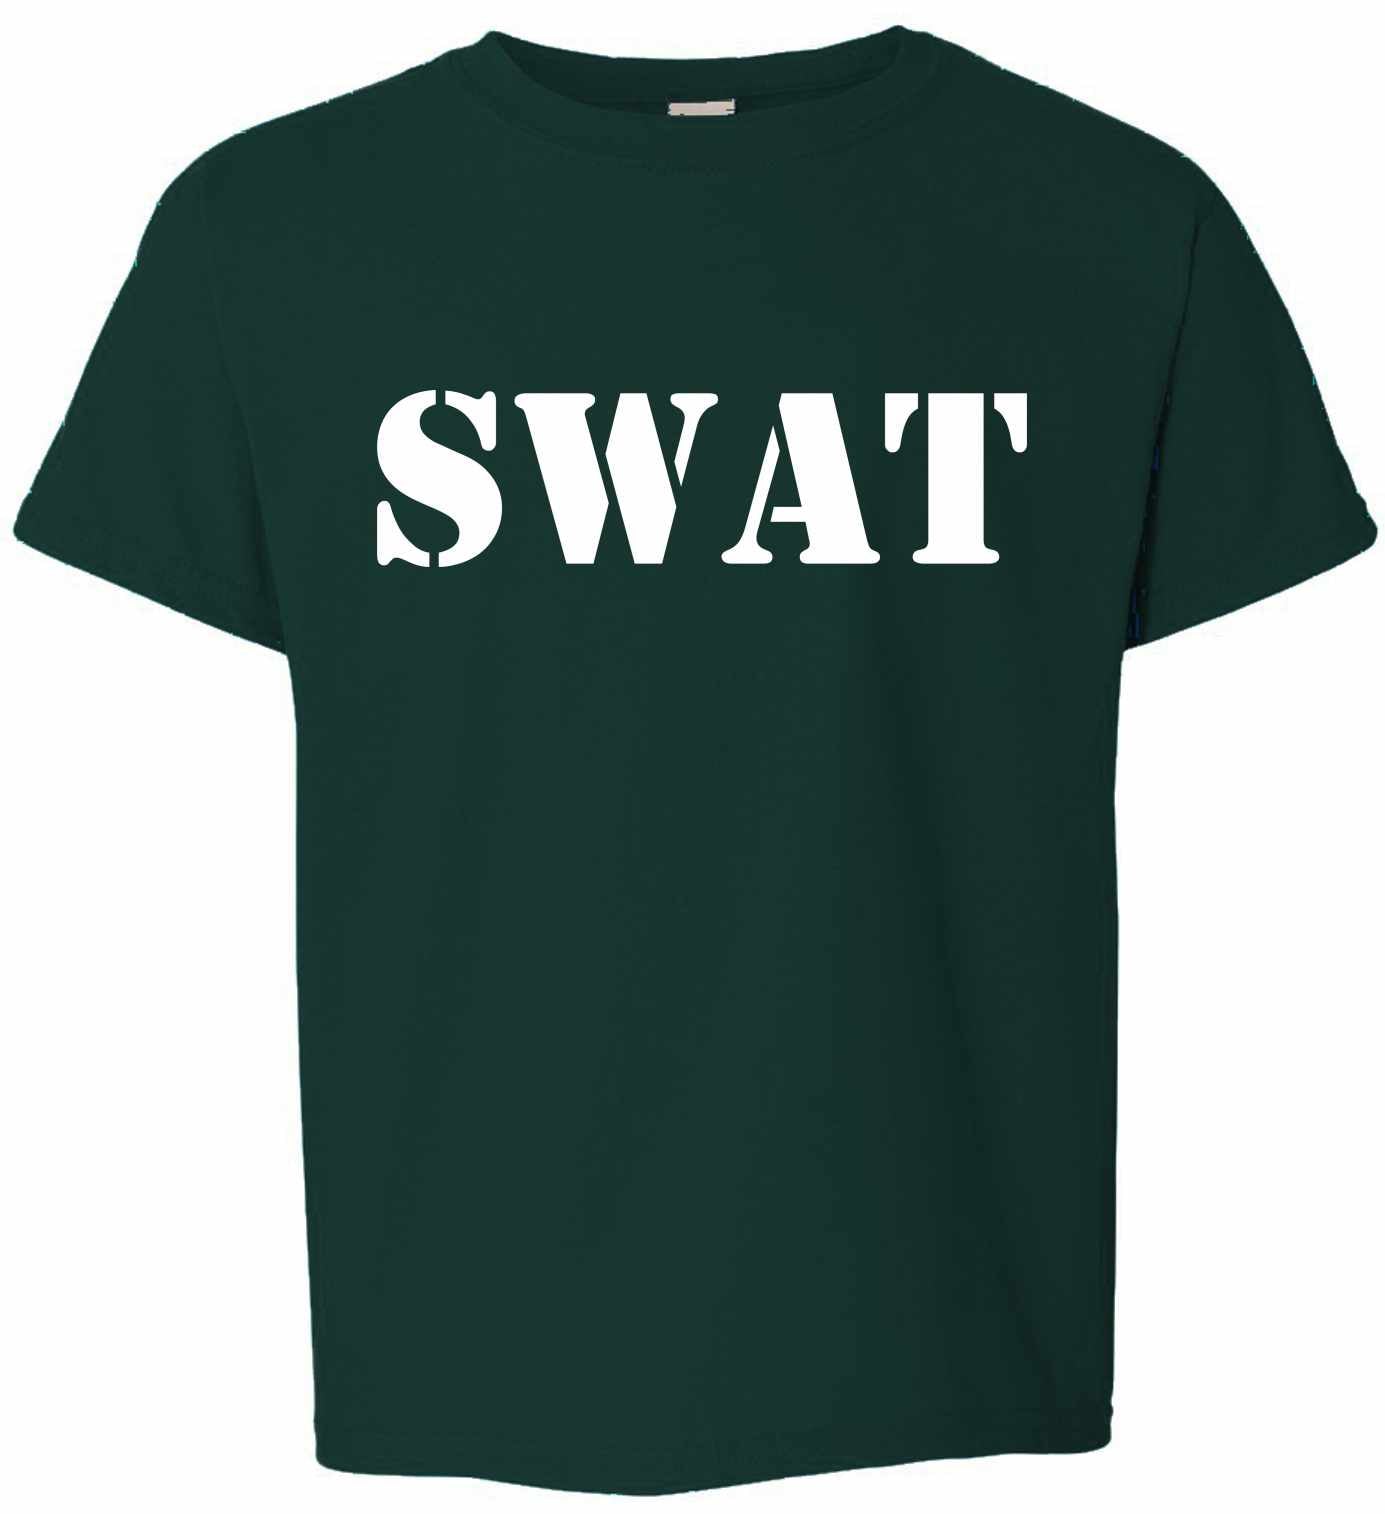 SWAT on Kids T-Shirt